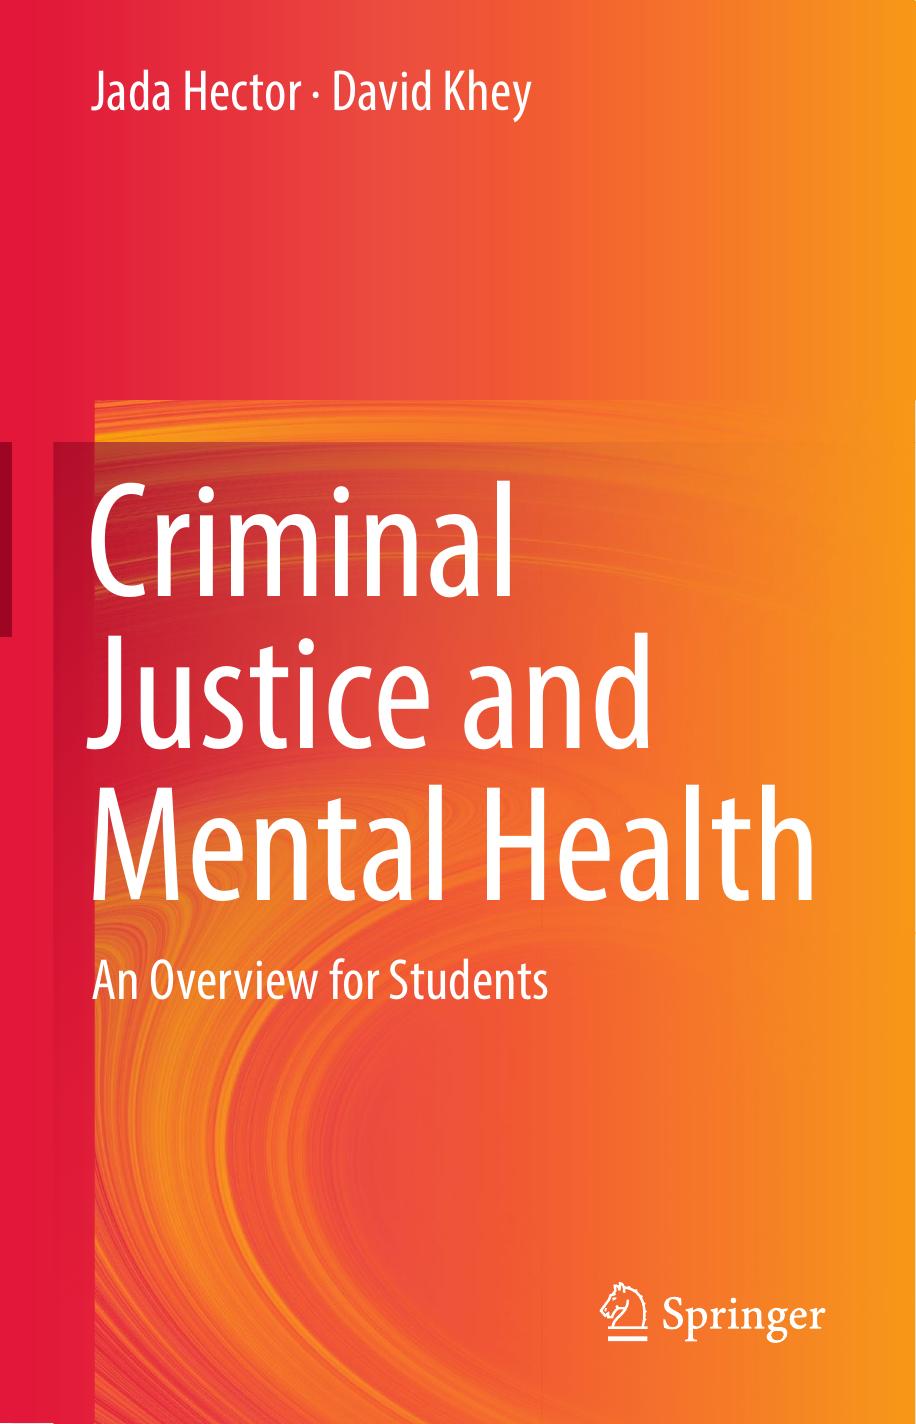 Criminal Justice and Mental Health by Jada Hector & David Khey